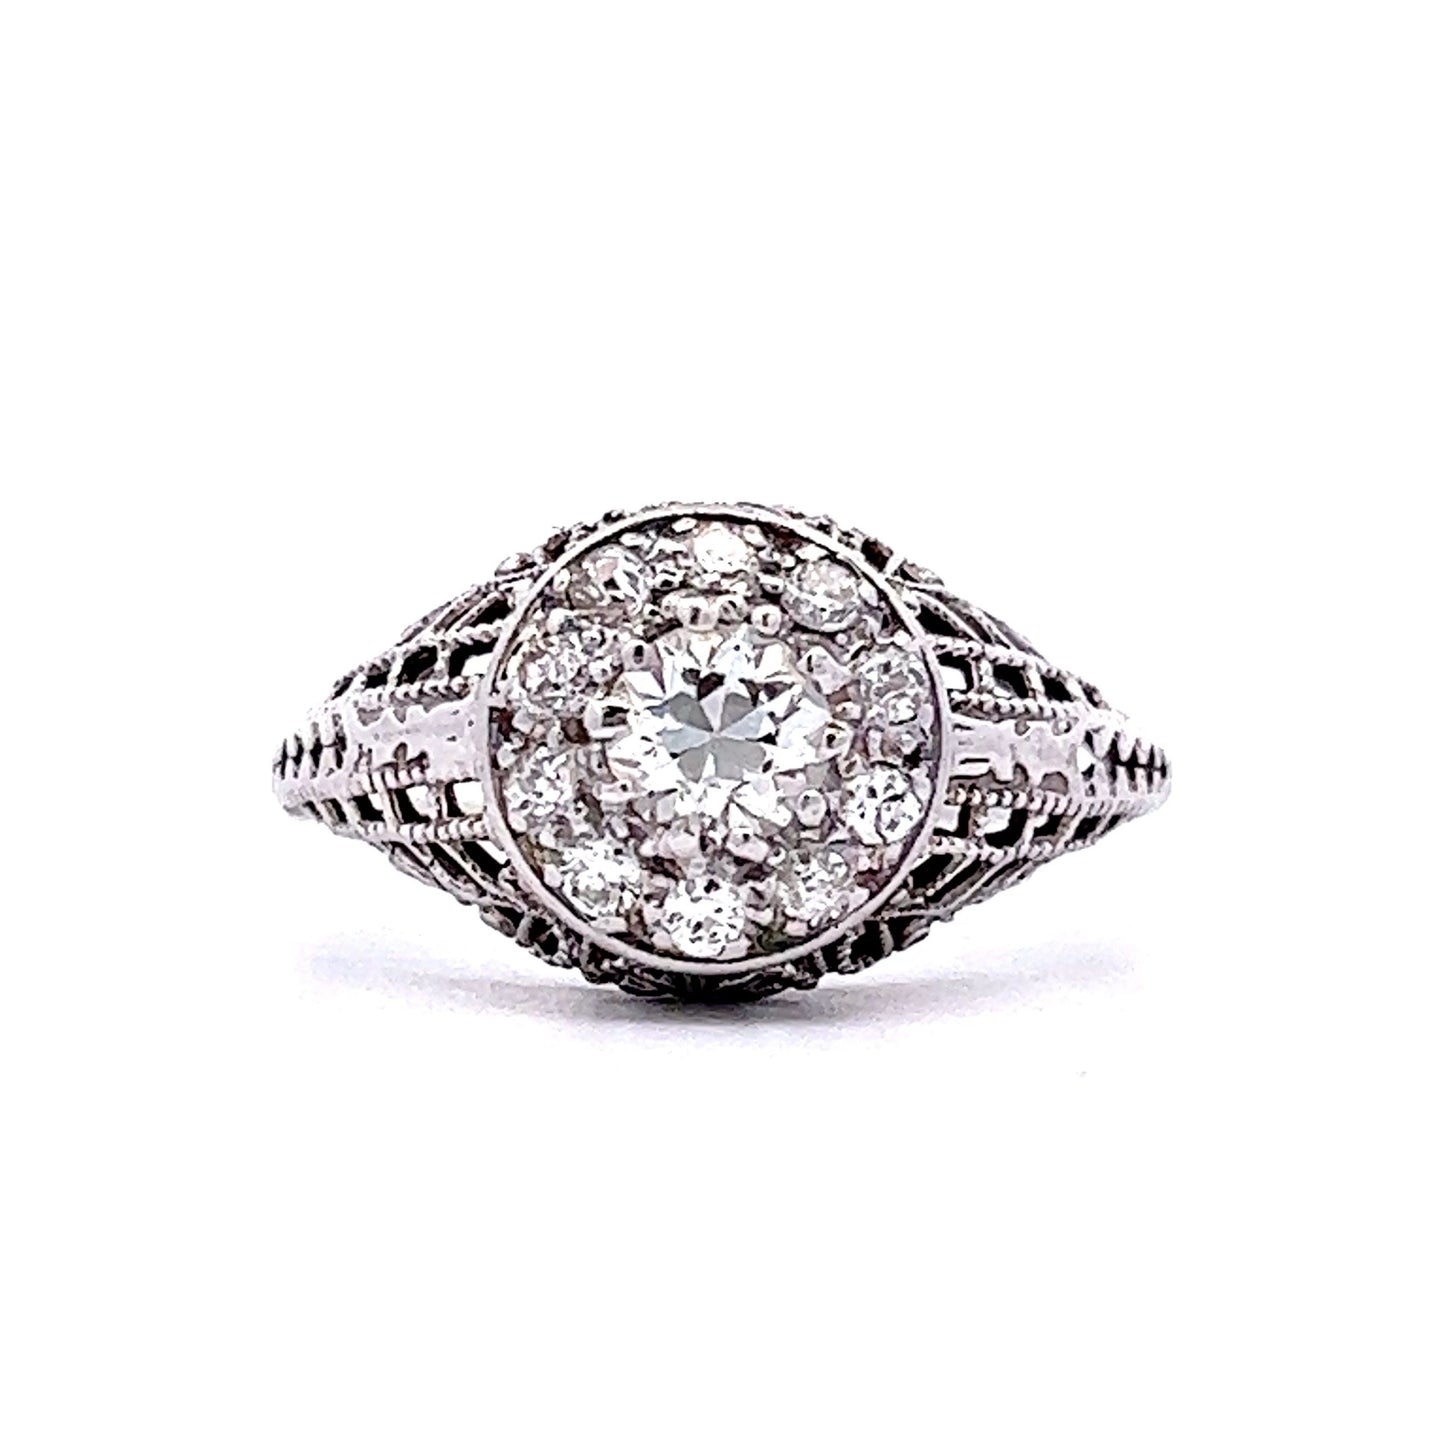 Pave Diamond Filigree Engagement Ring in 18k White Gold